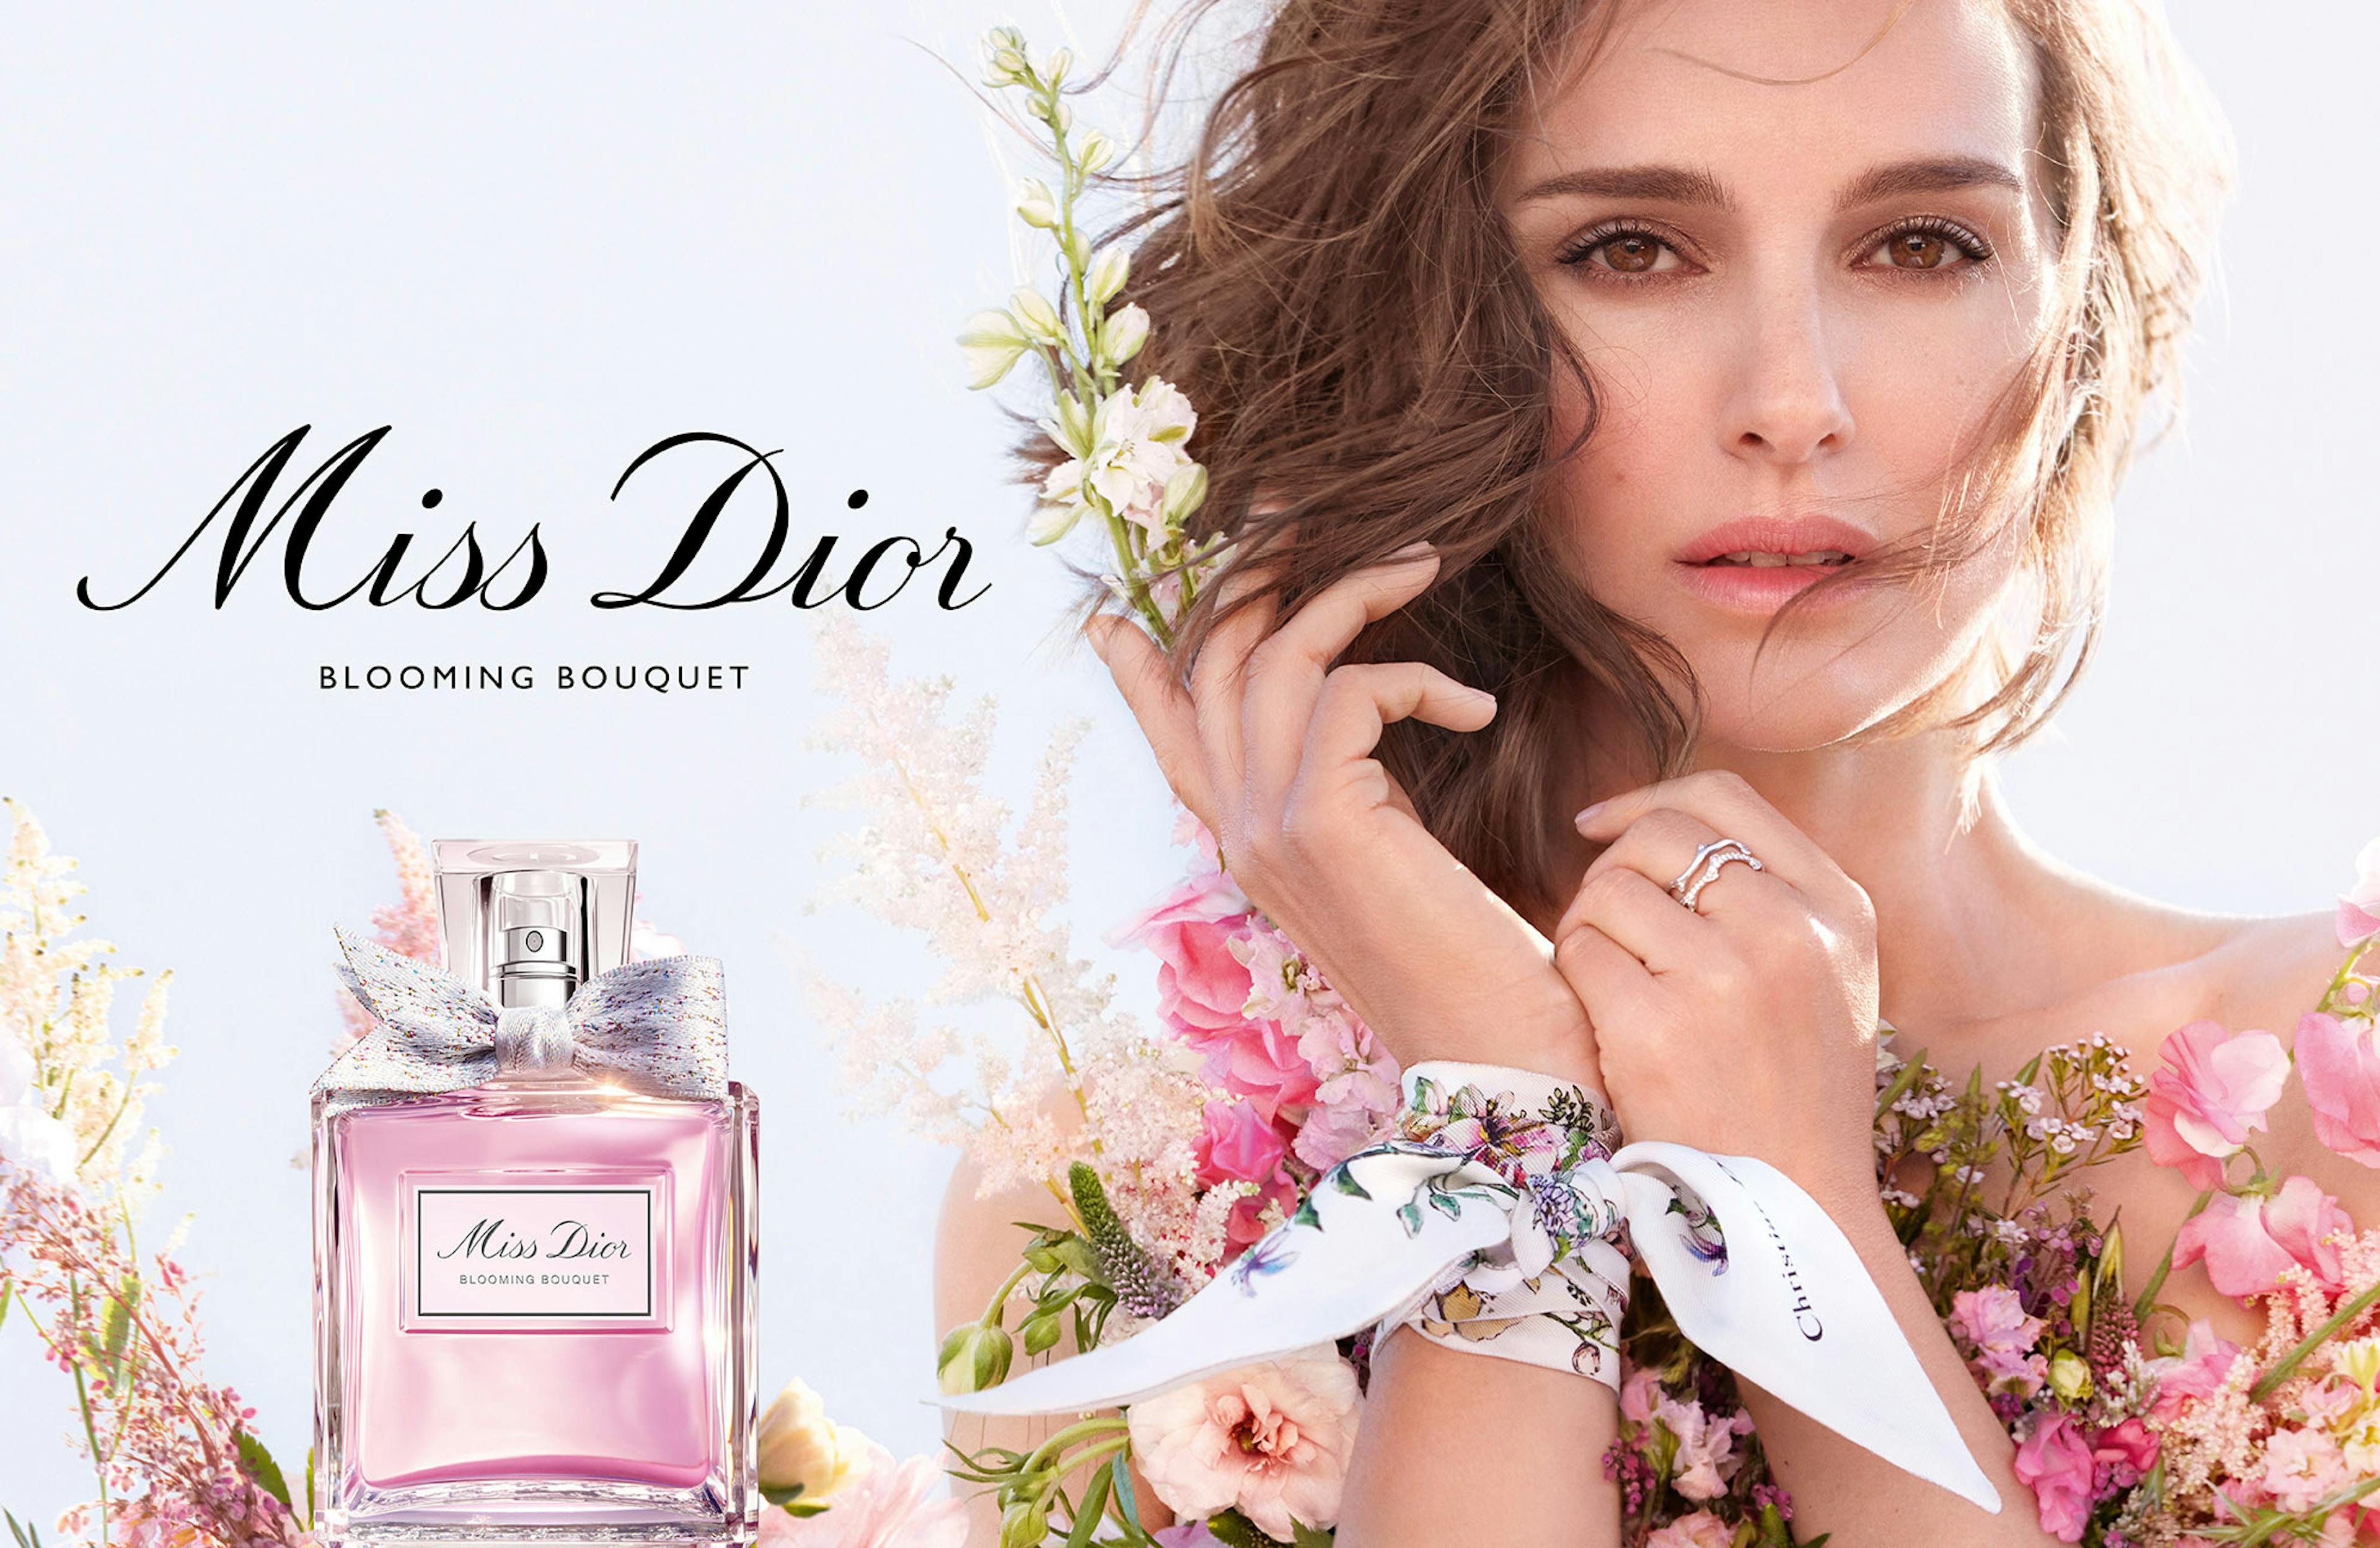 MISS DIOR © Parfums Christian Dior